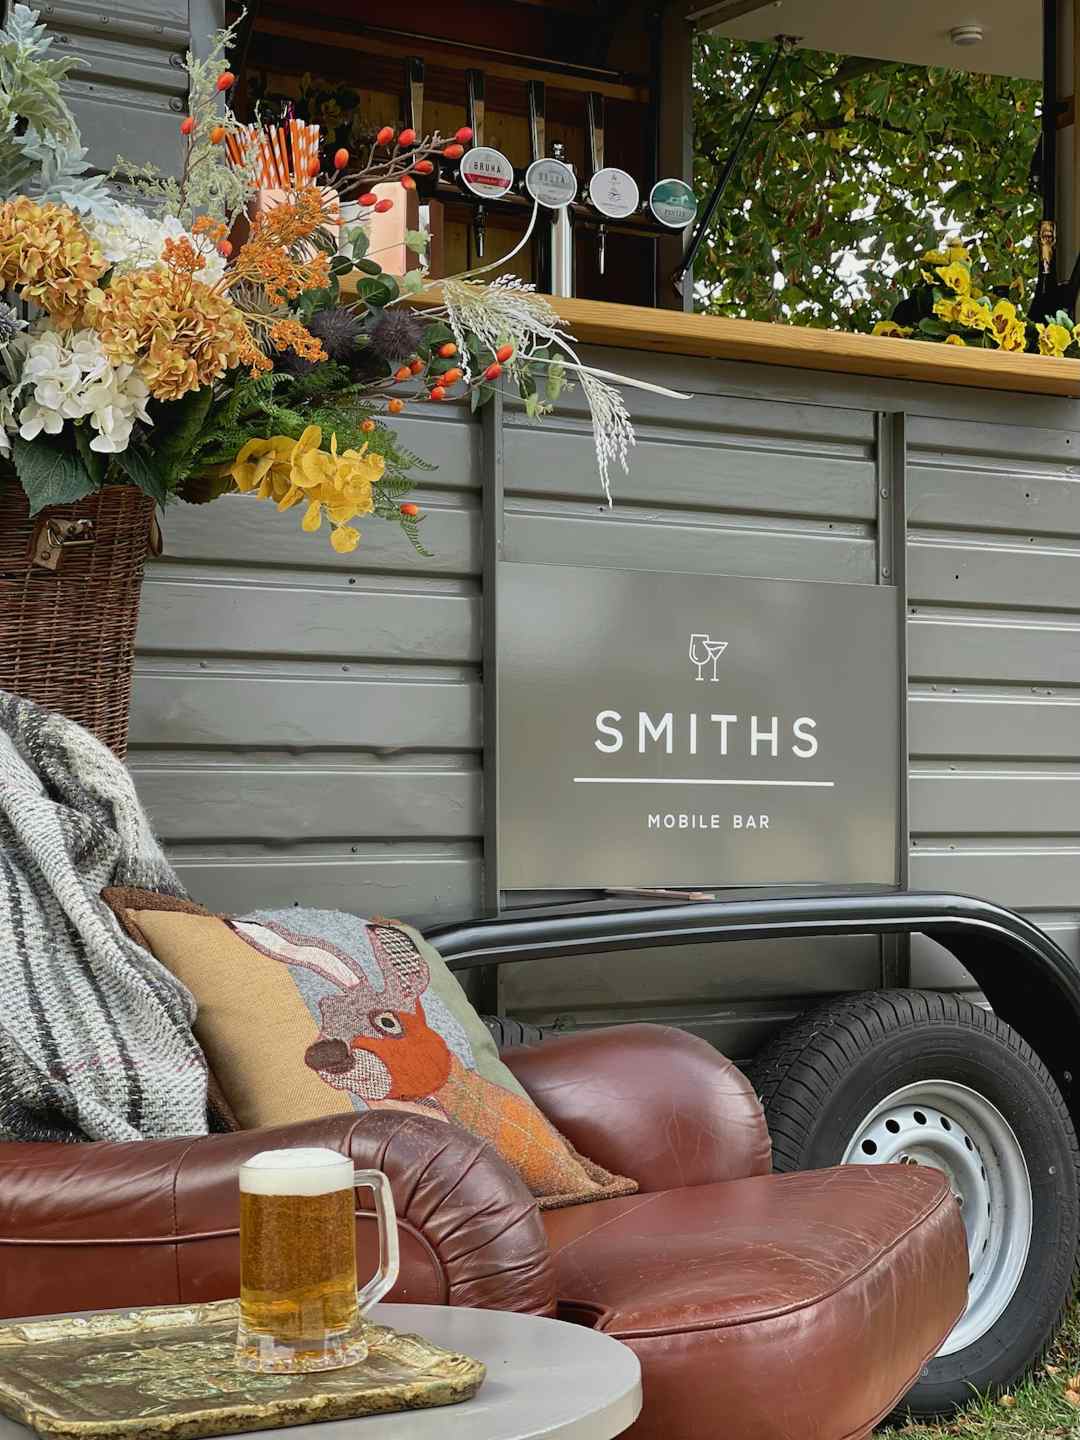 Hero image for supplier Smiths Mobile Bar